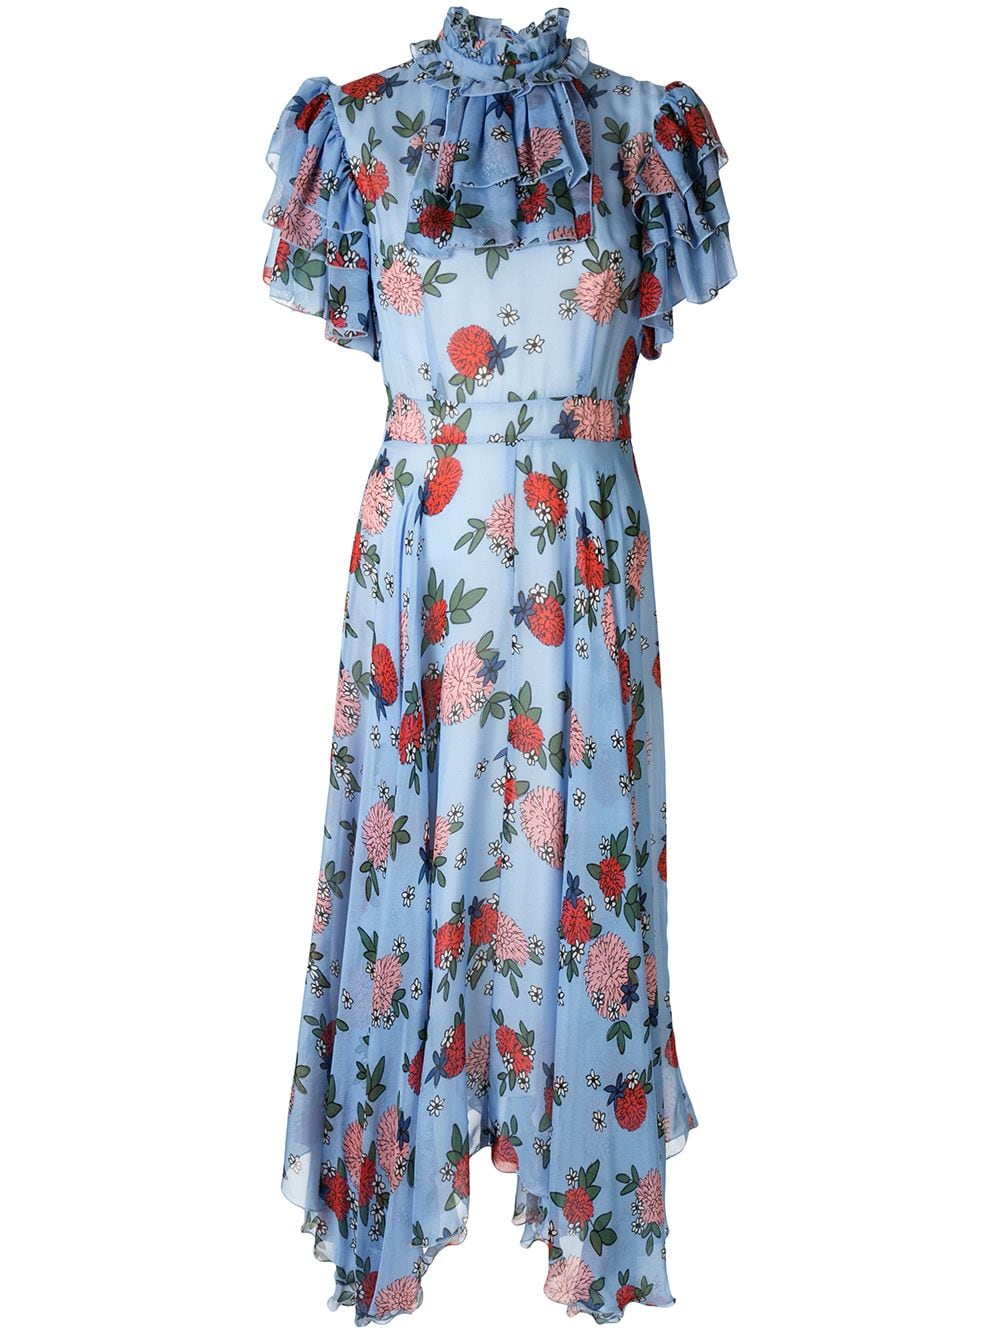 Sentimental floral-print dress